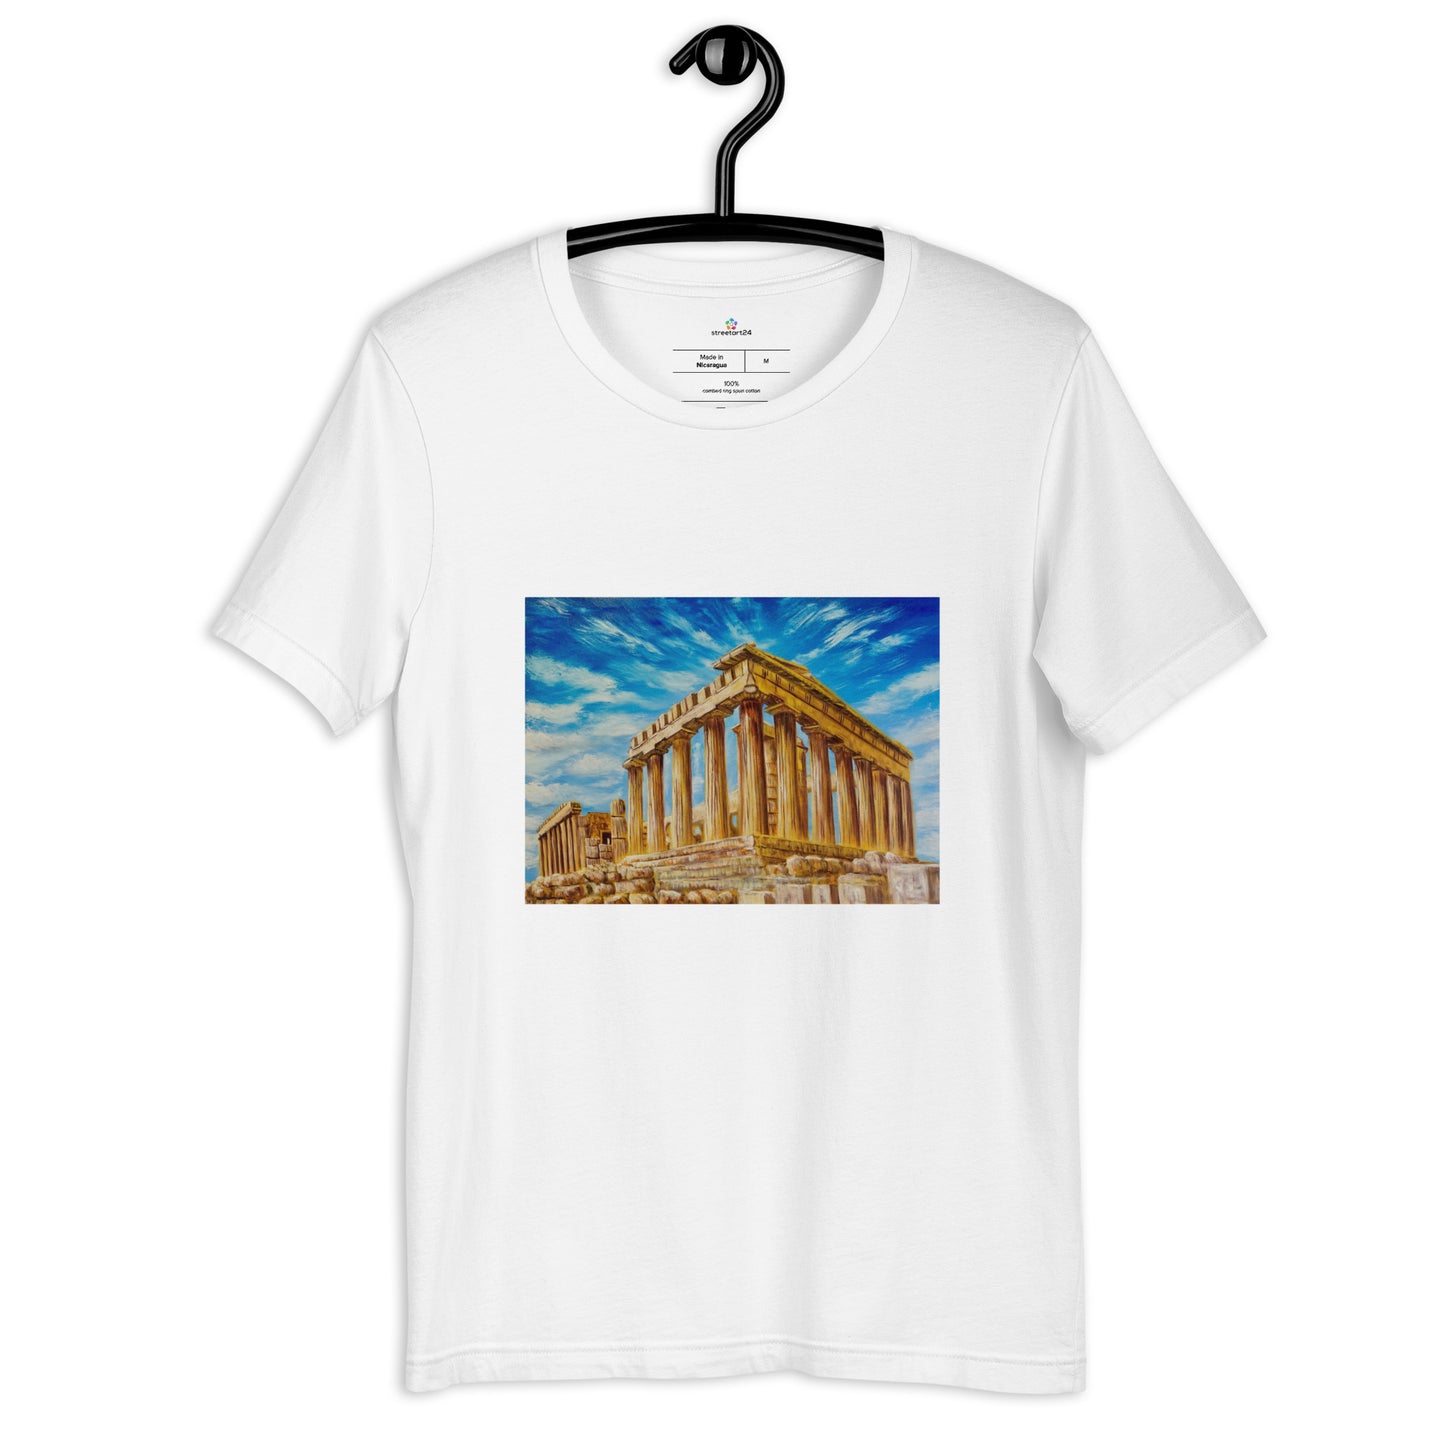 The Parthenon Athens Unisex Short Sleeve T-Shirt